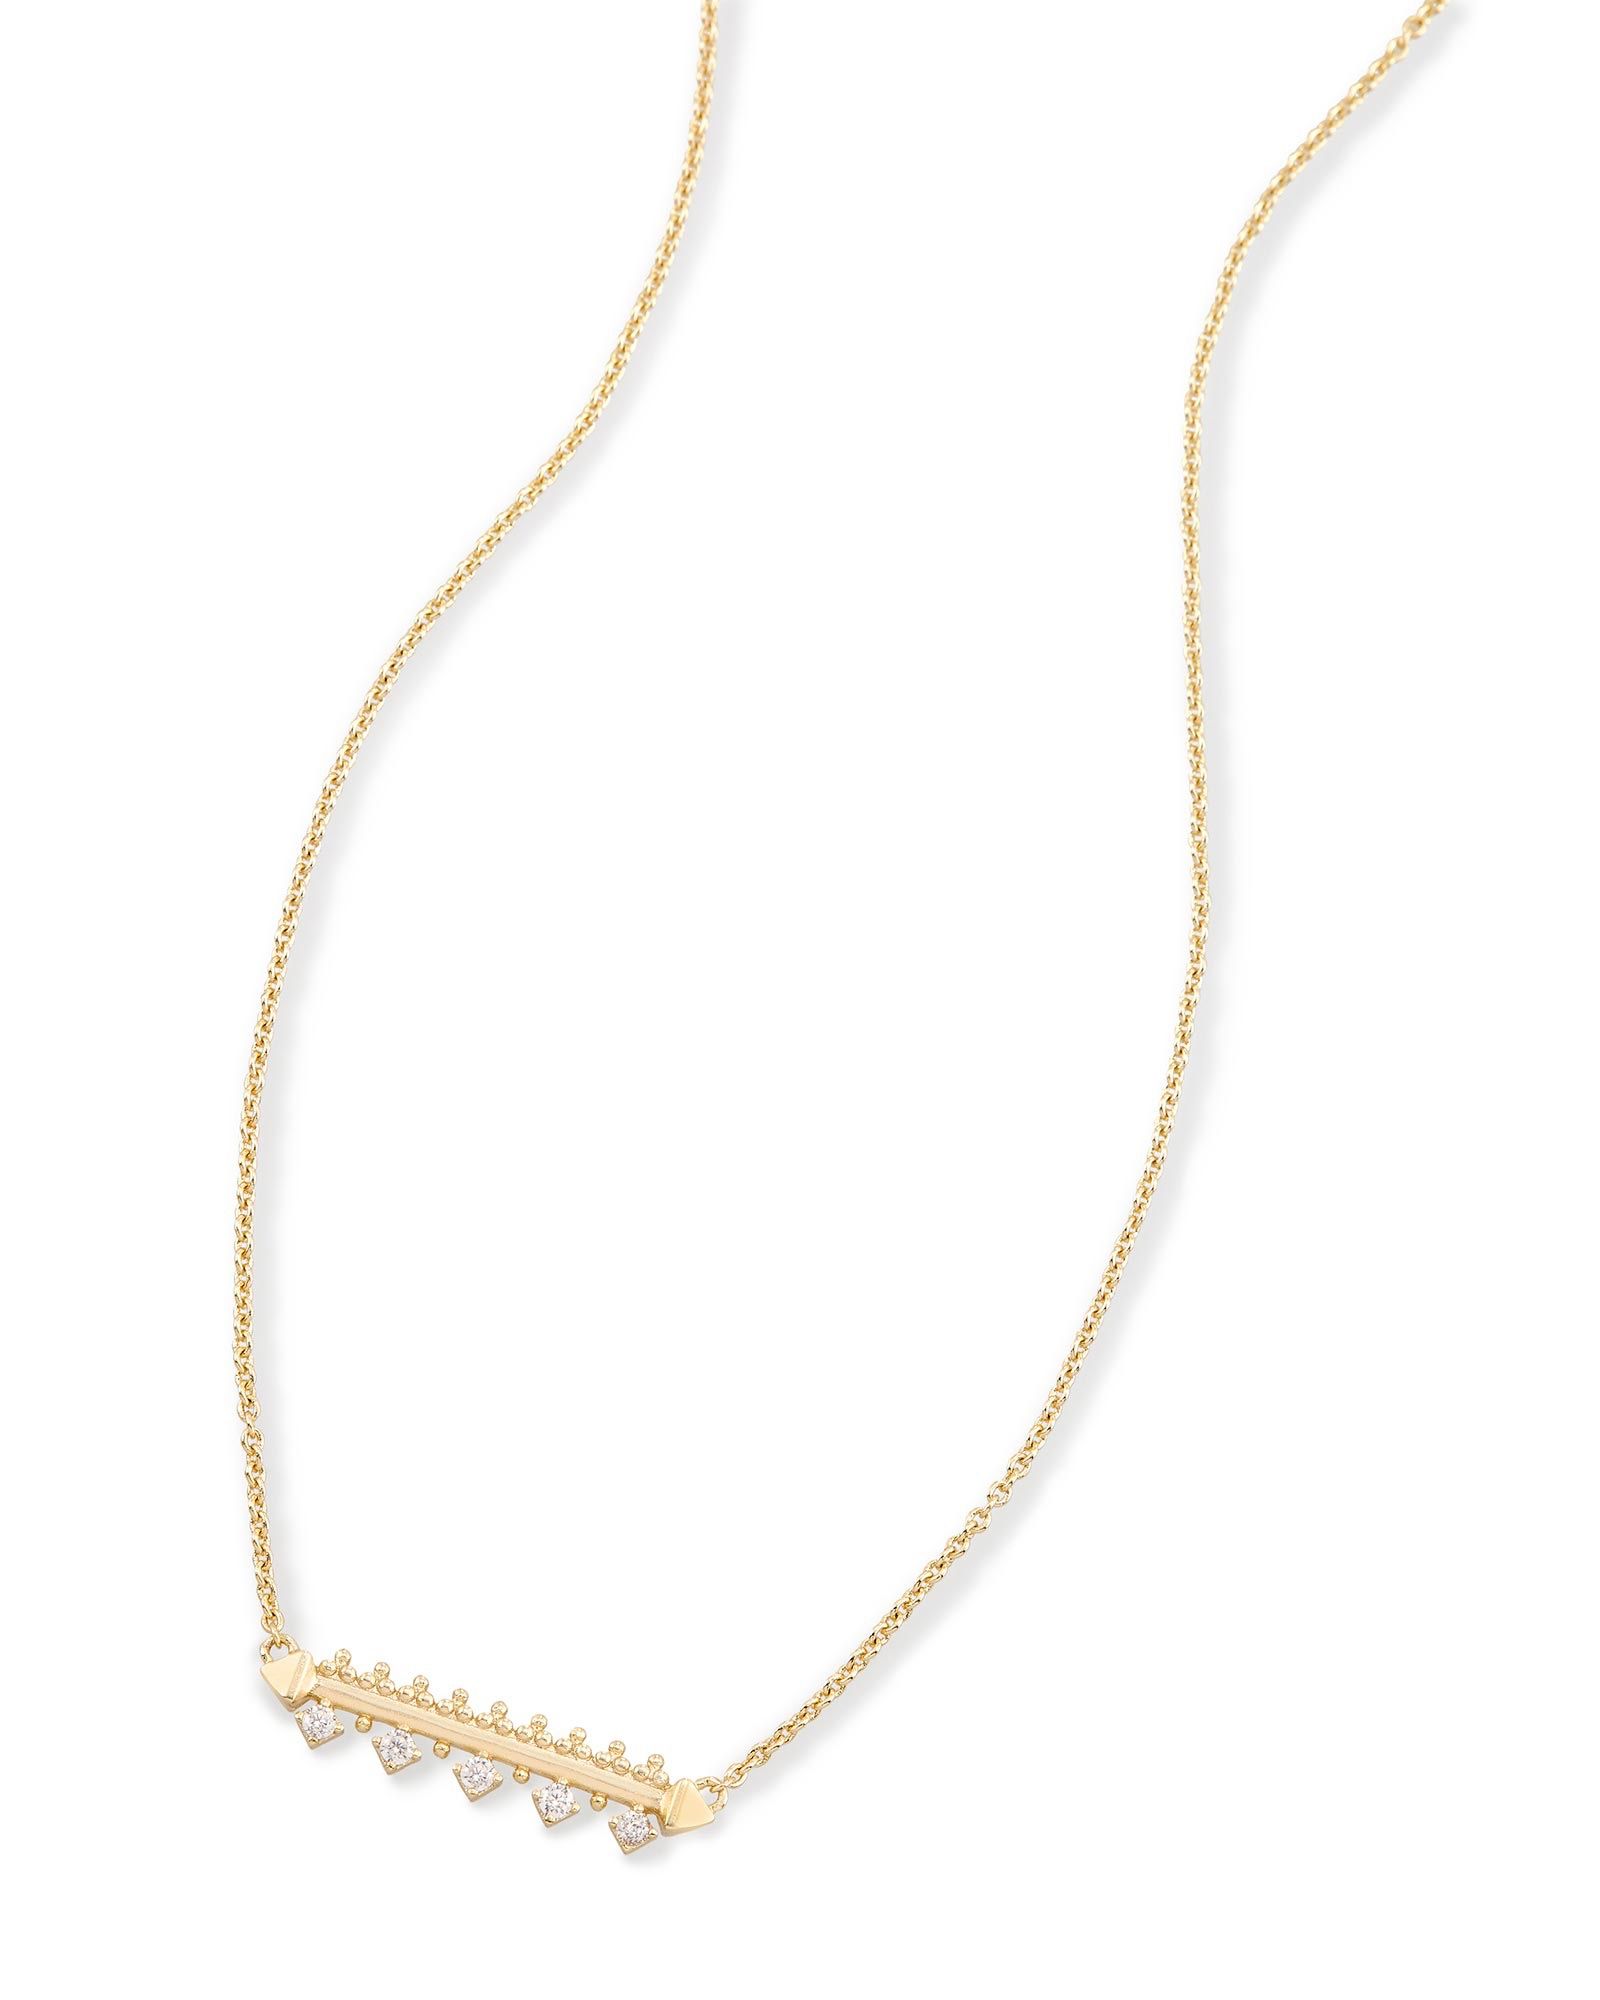 Anissa Bar Pendant Necklace in Gold | Kendra Scott